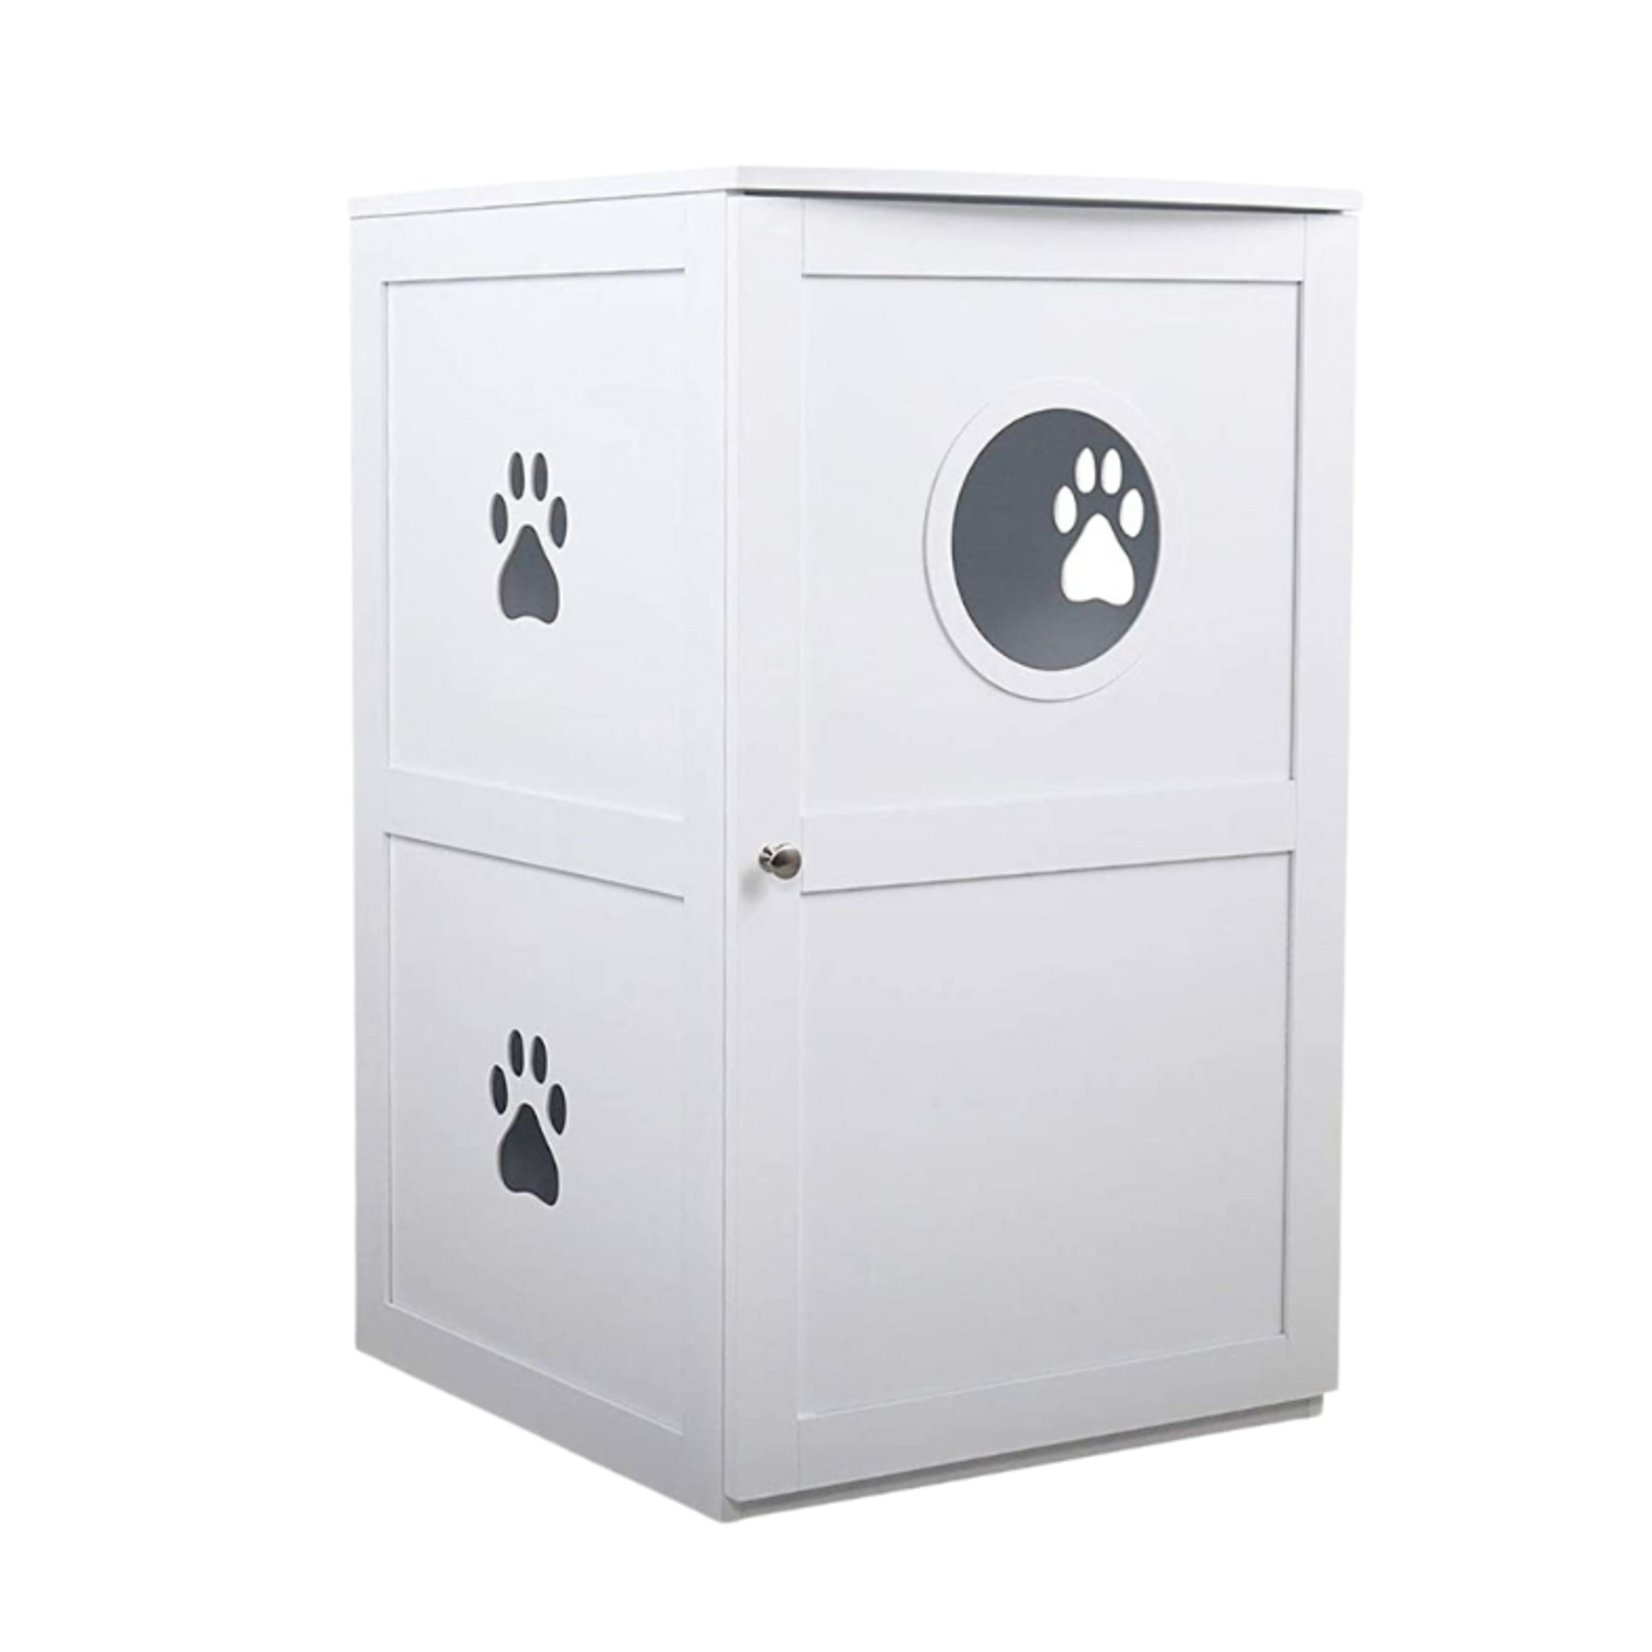 Coziwow XL Enclosed Litter Box Cabinet